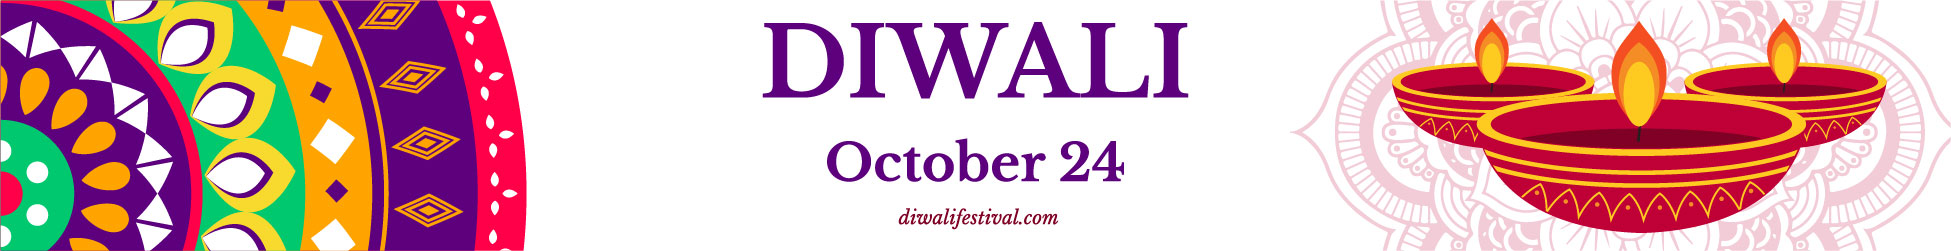 Diwali Website Banner